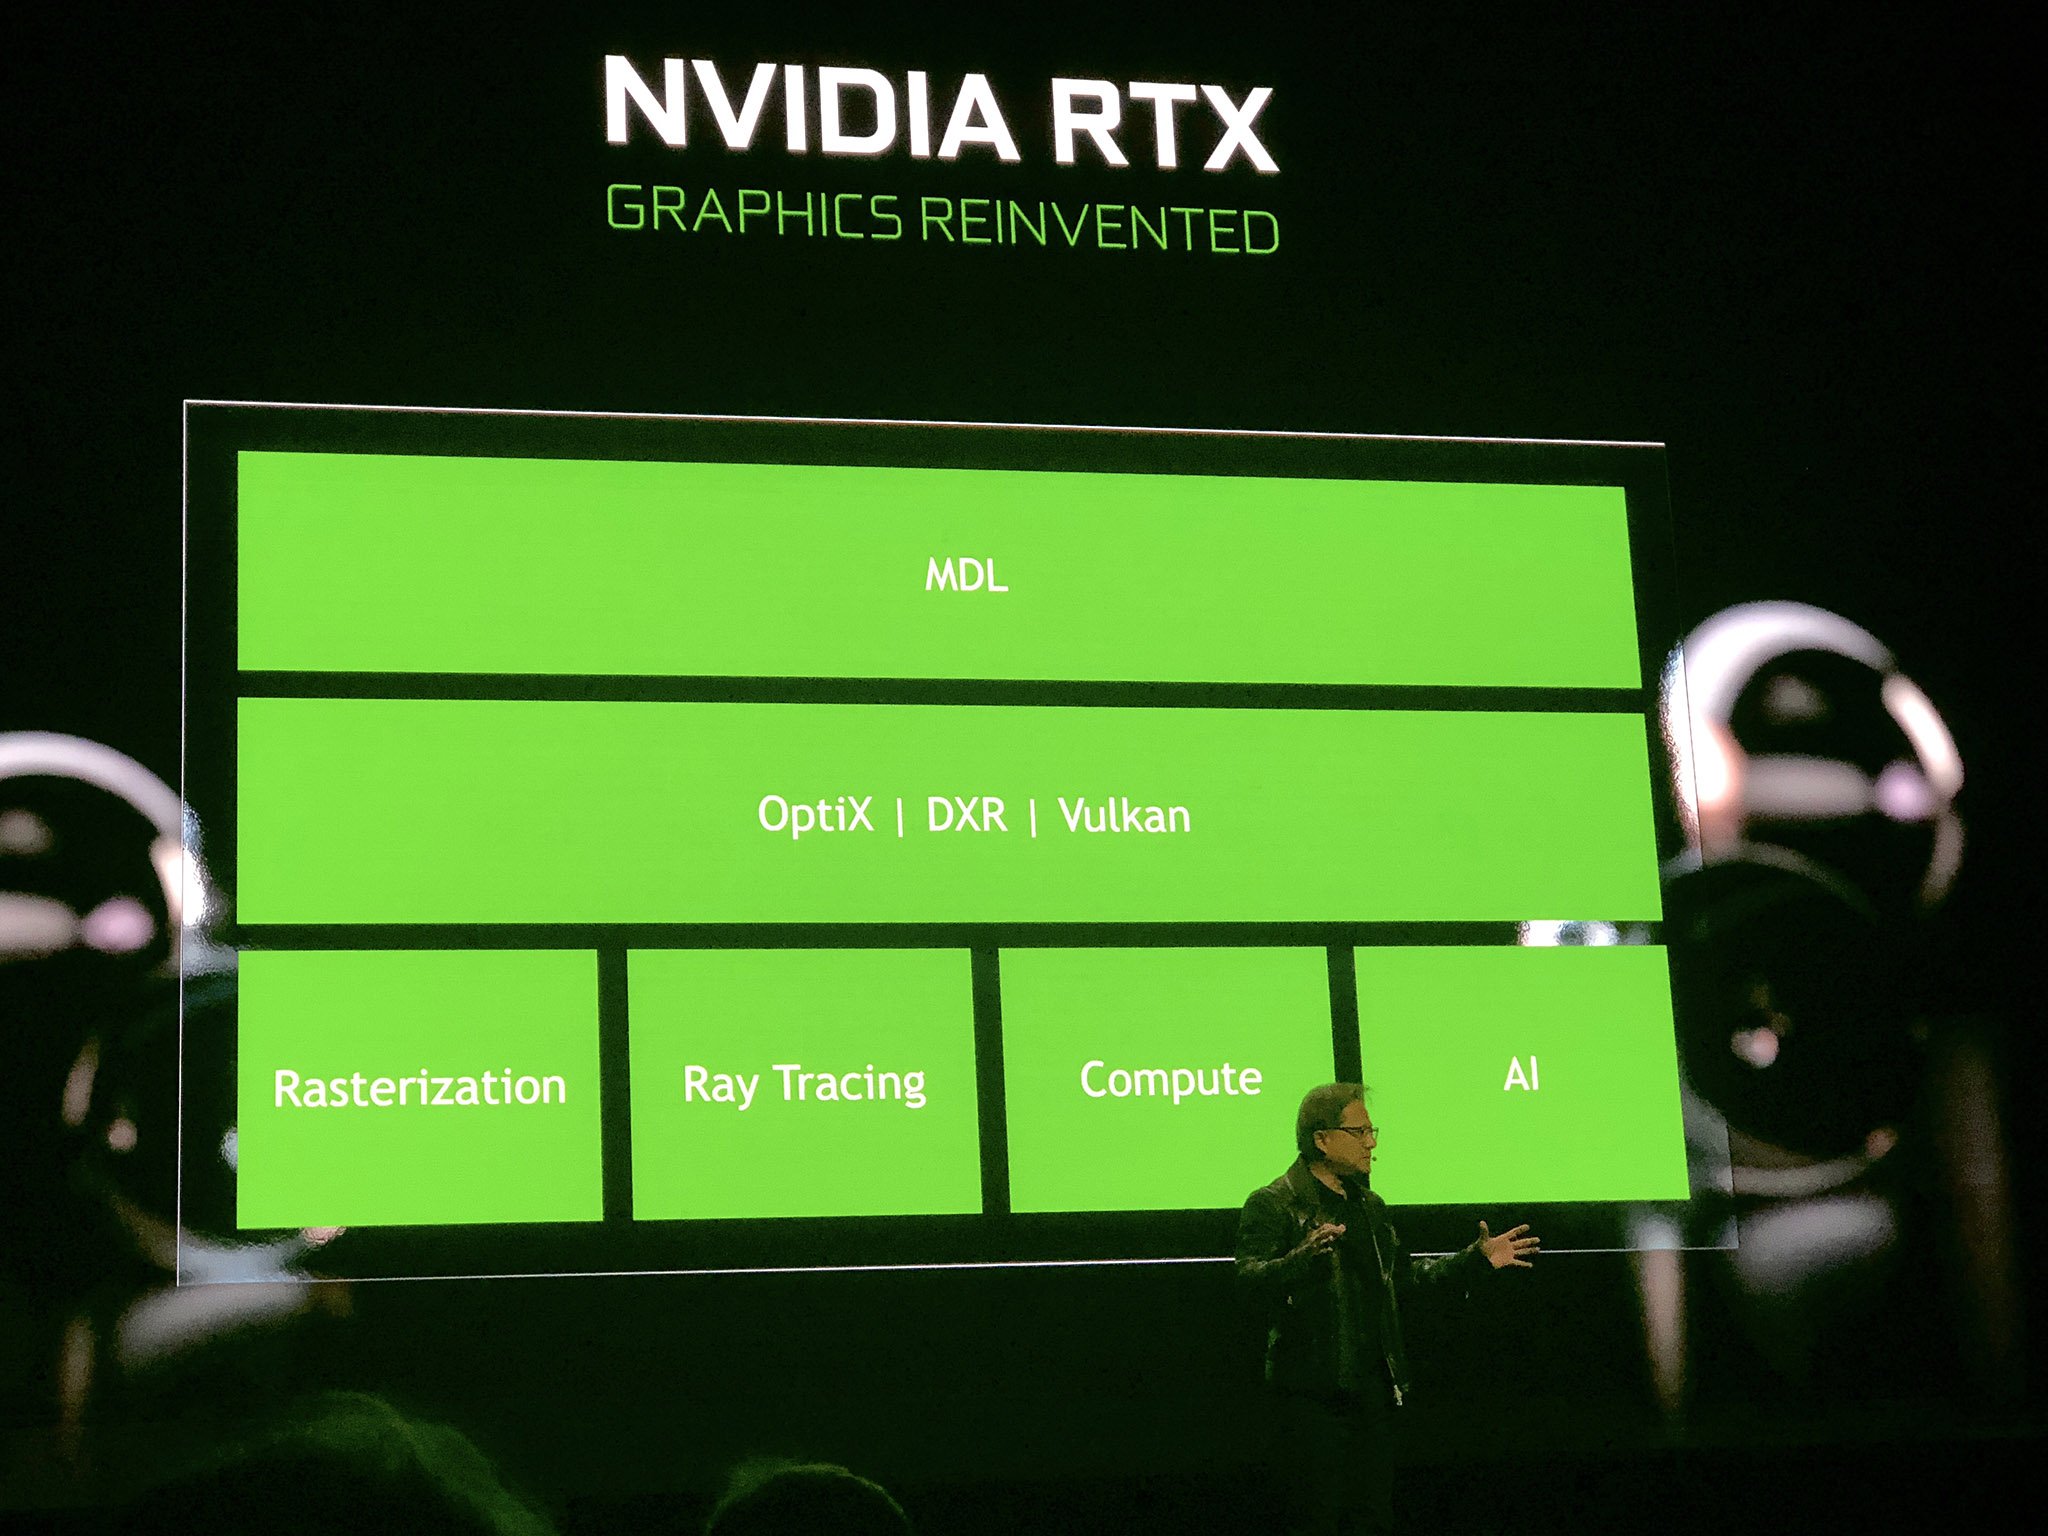 NVIDIA GeForce RTX 2080 and RTX 2080 Ti